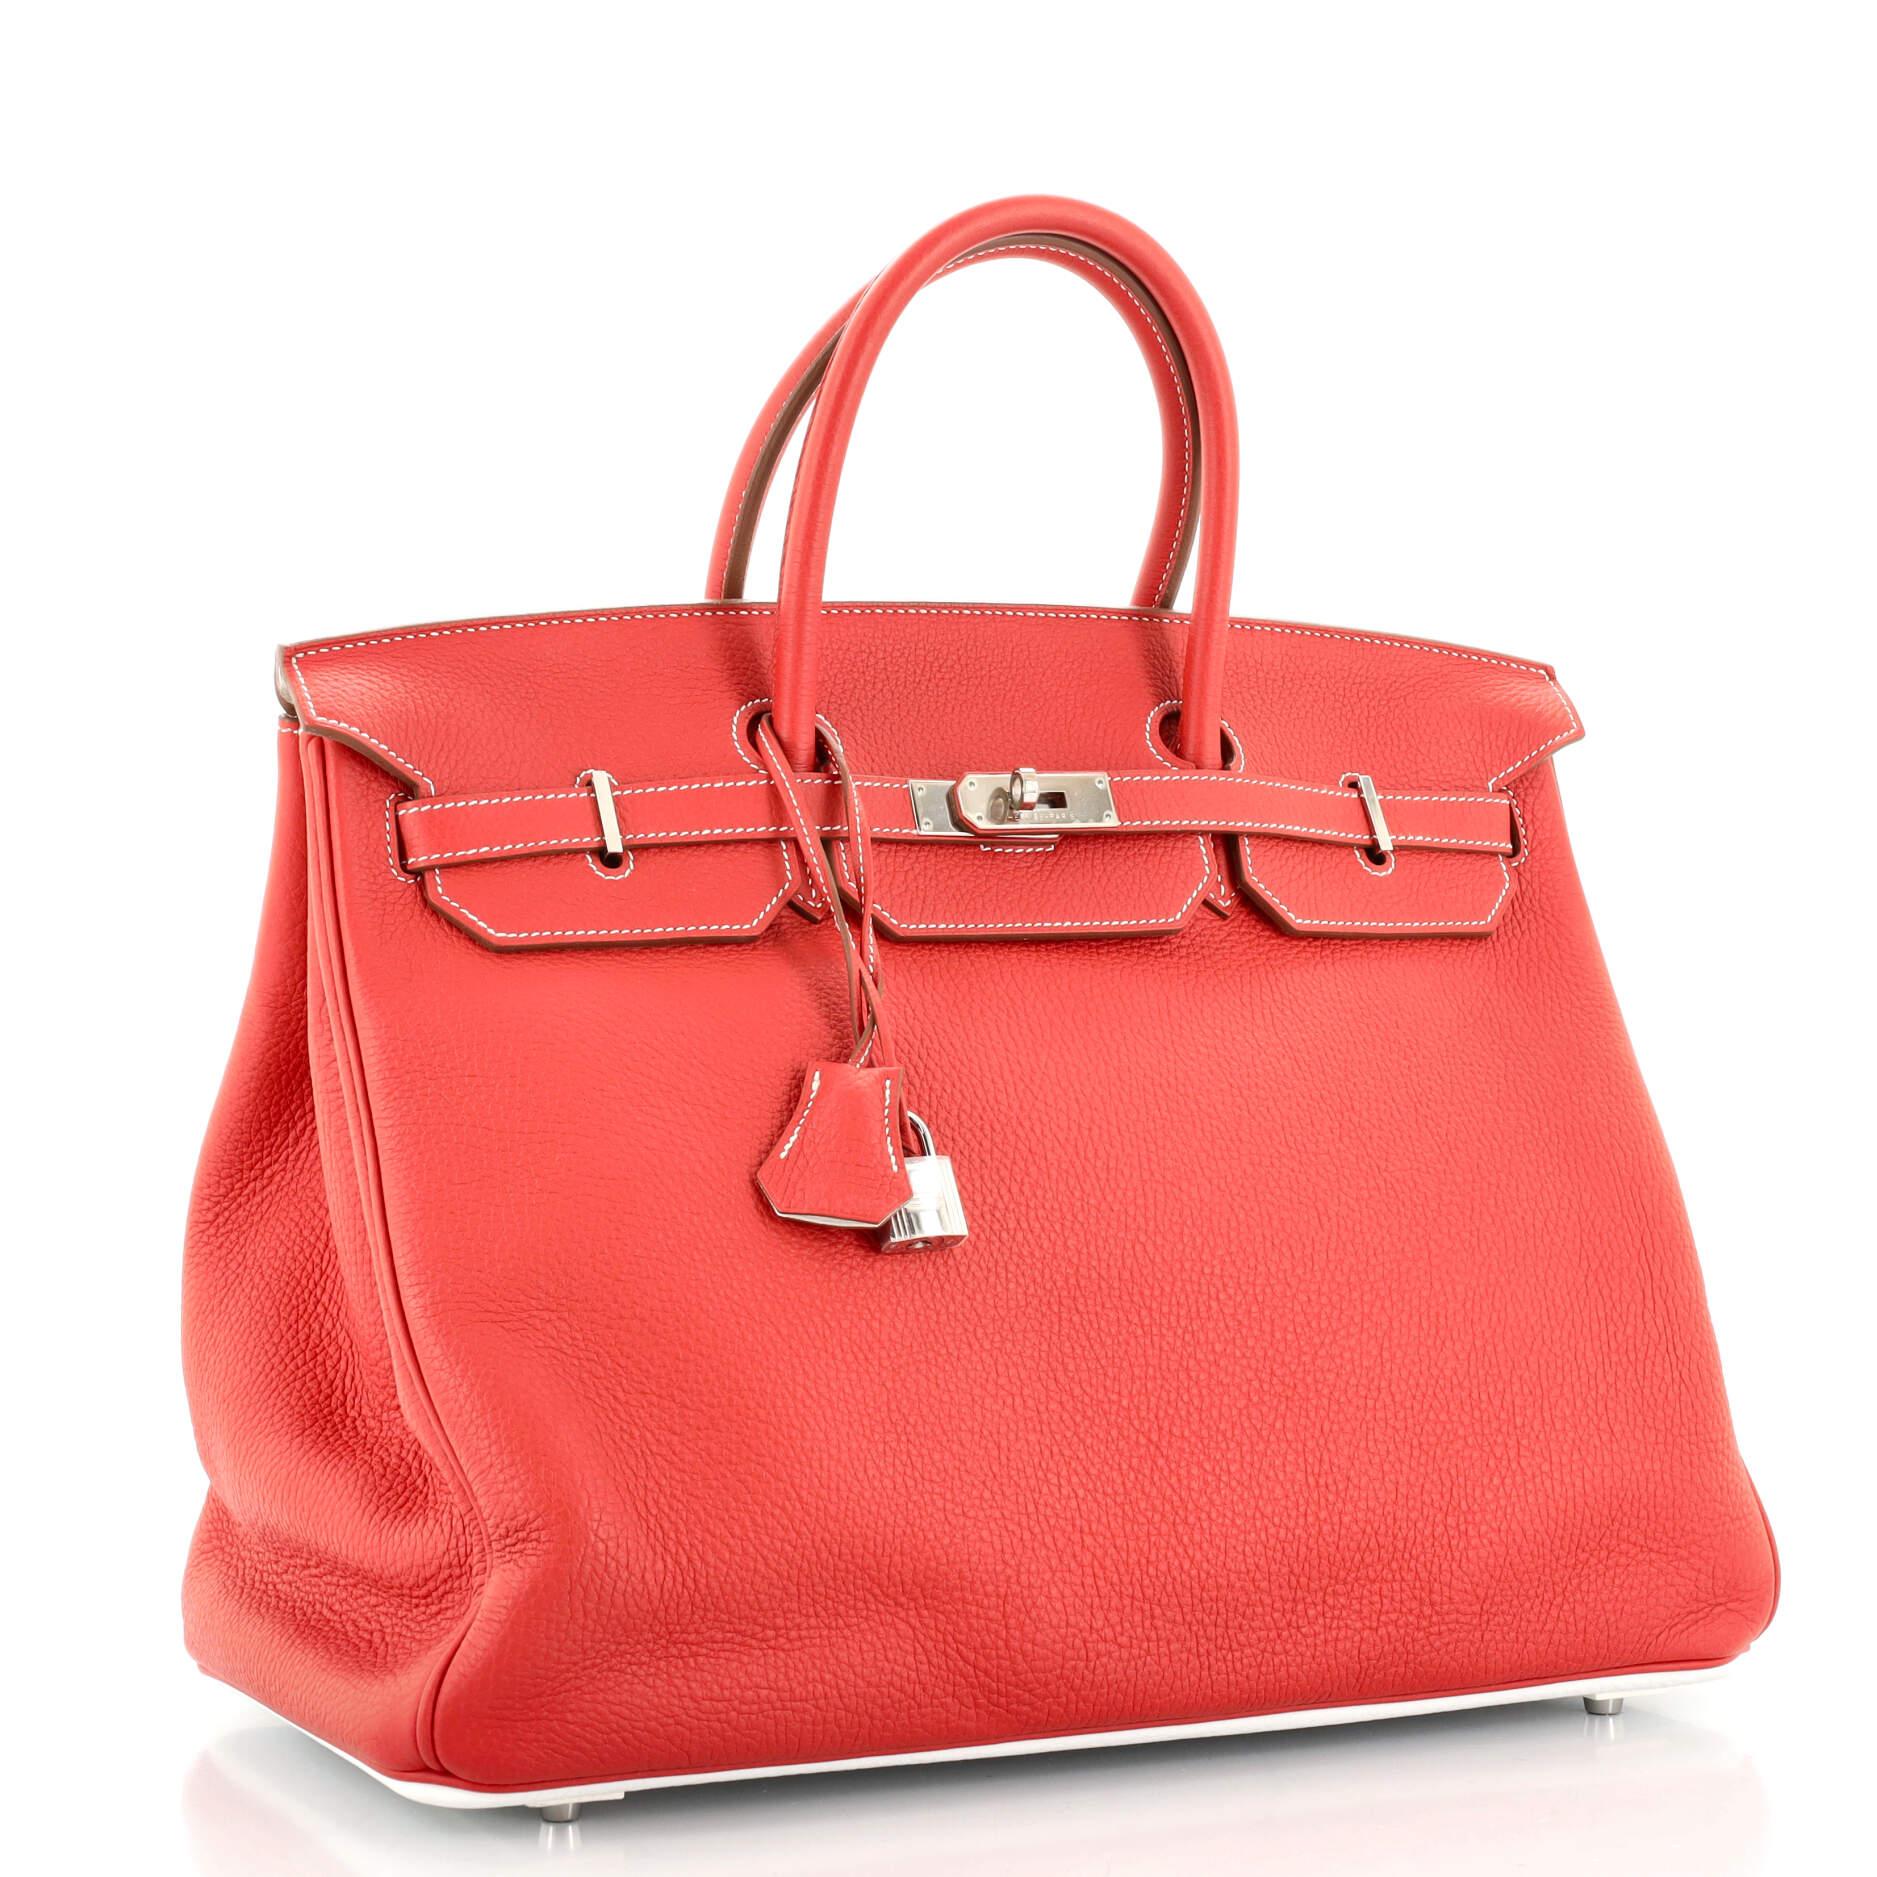 Red Hermes Birkin Handbag Bicolor Clemence with Palladium Hardware 40